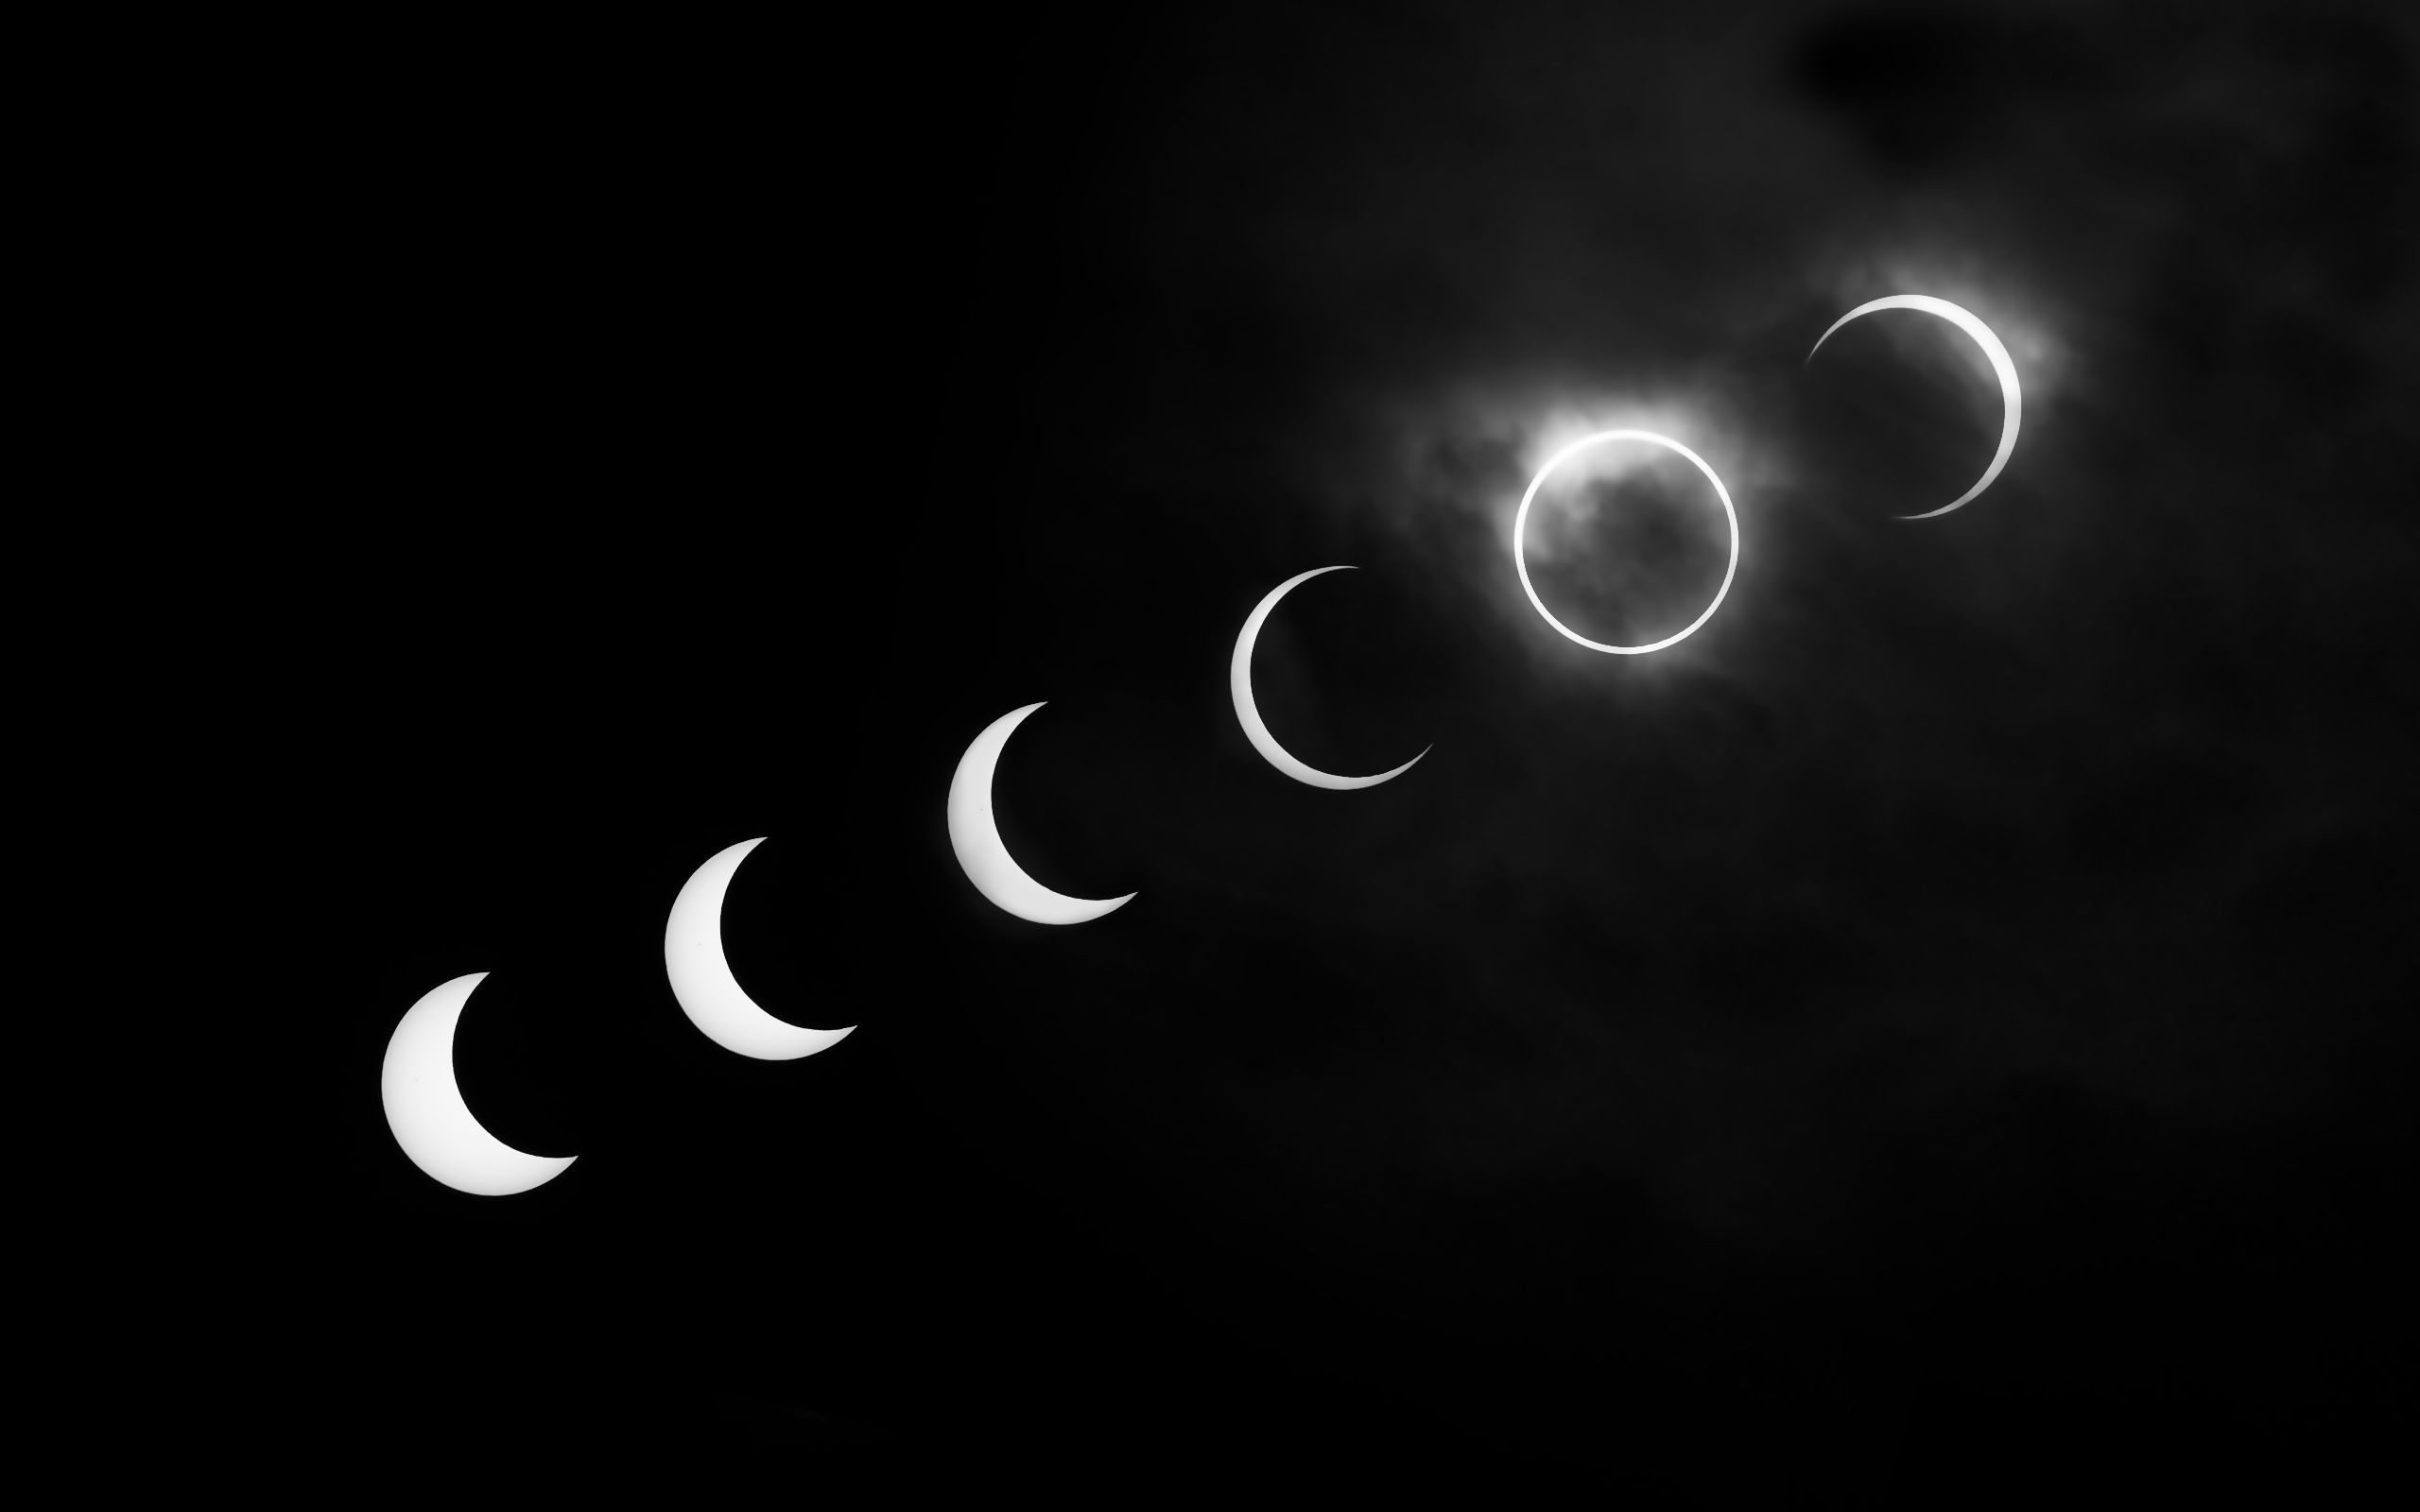 Solar eclipse black and white desktop wallpaper | Black and white ...